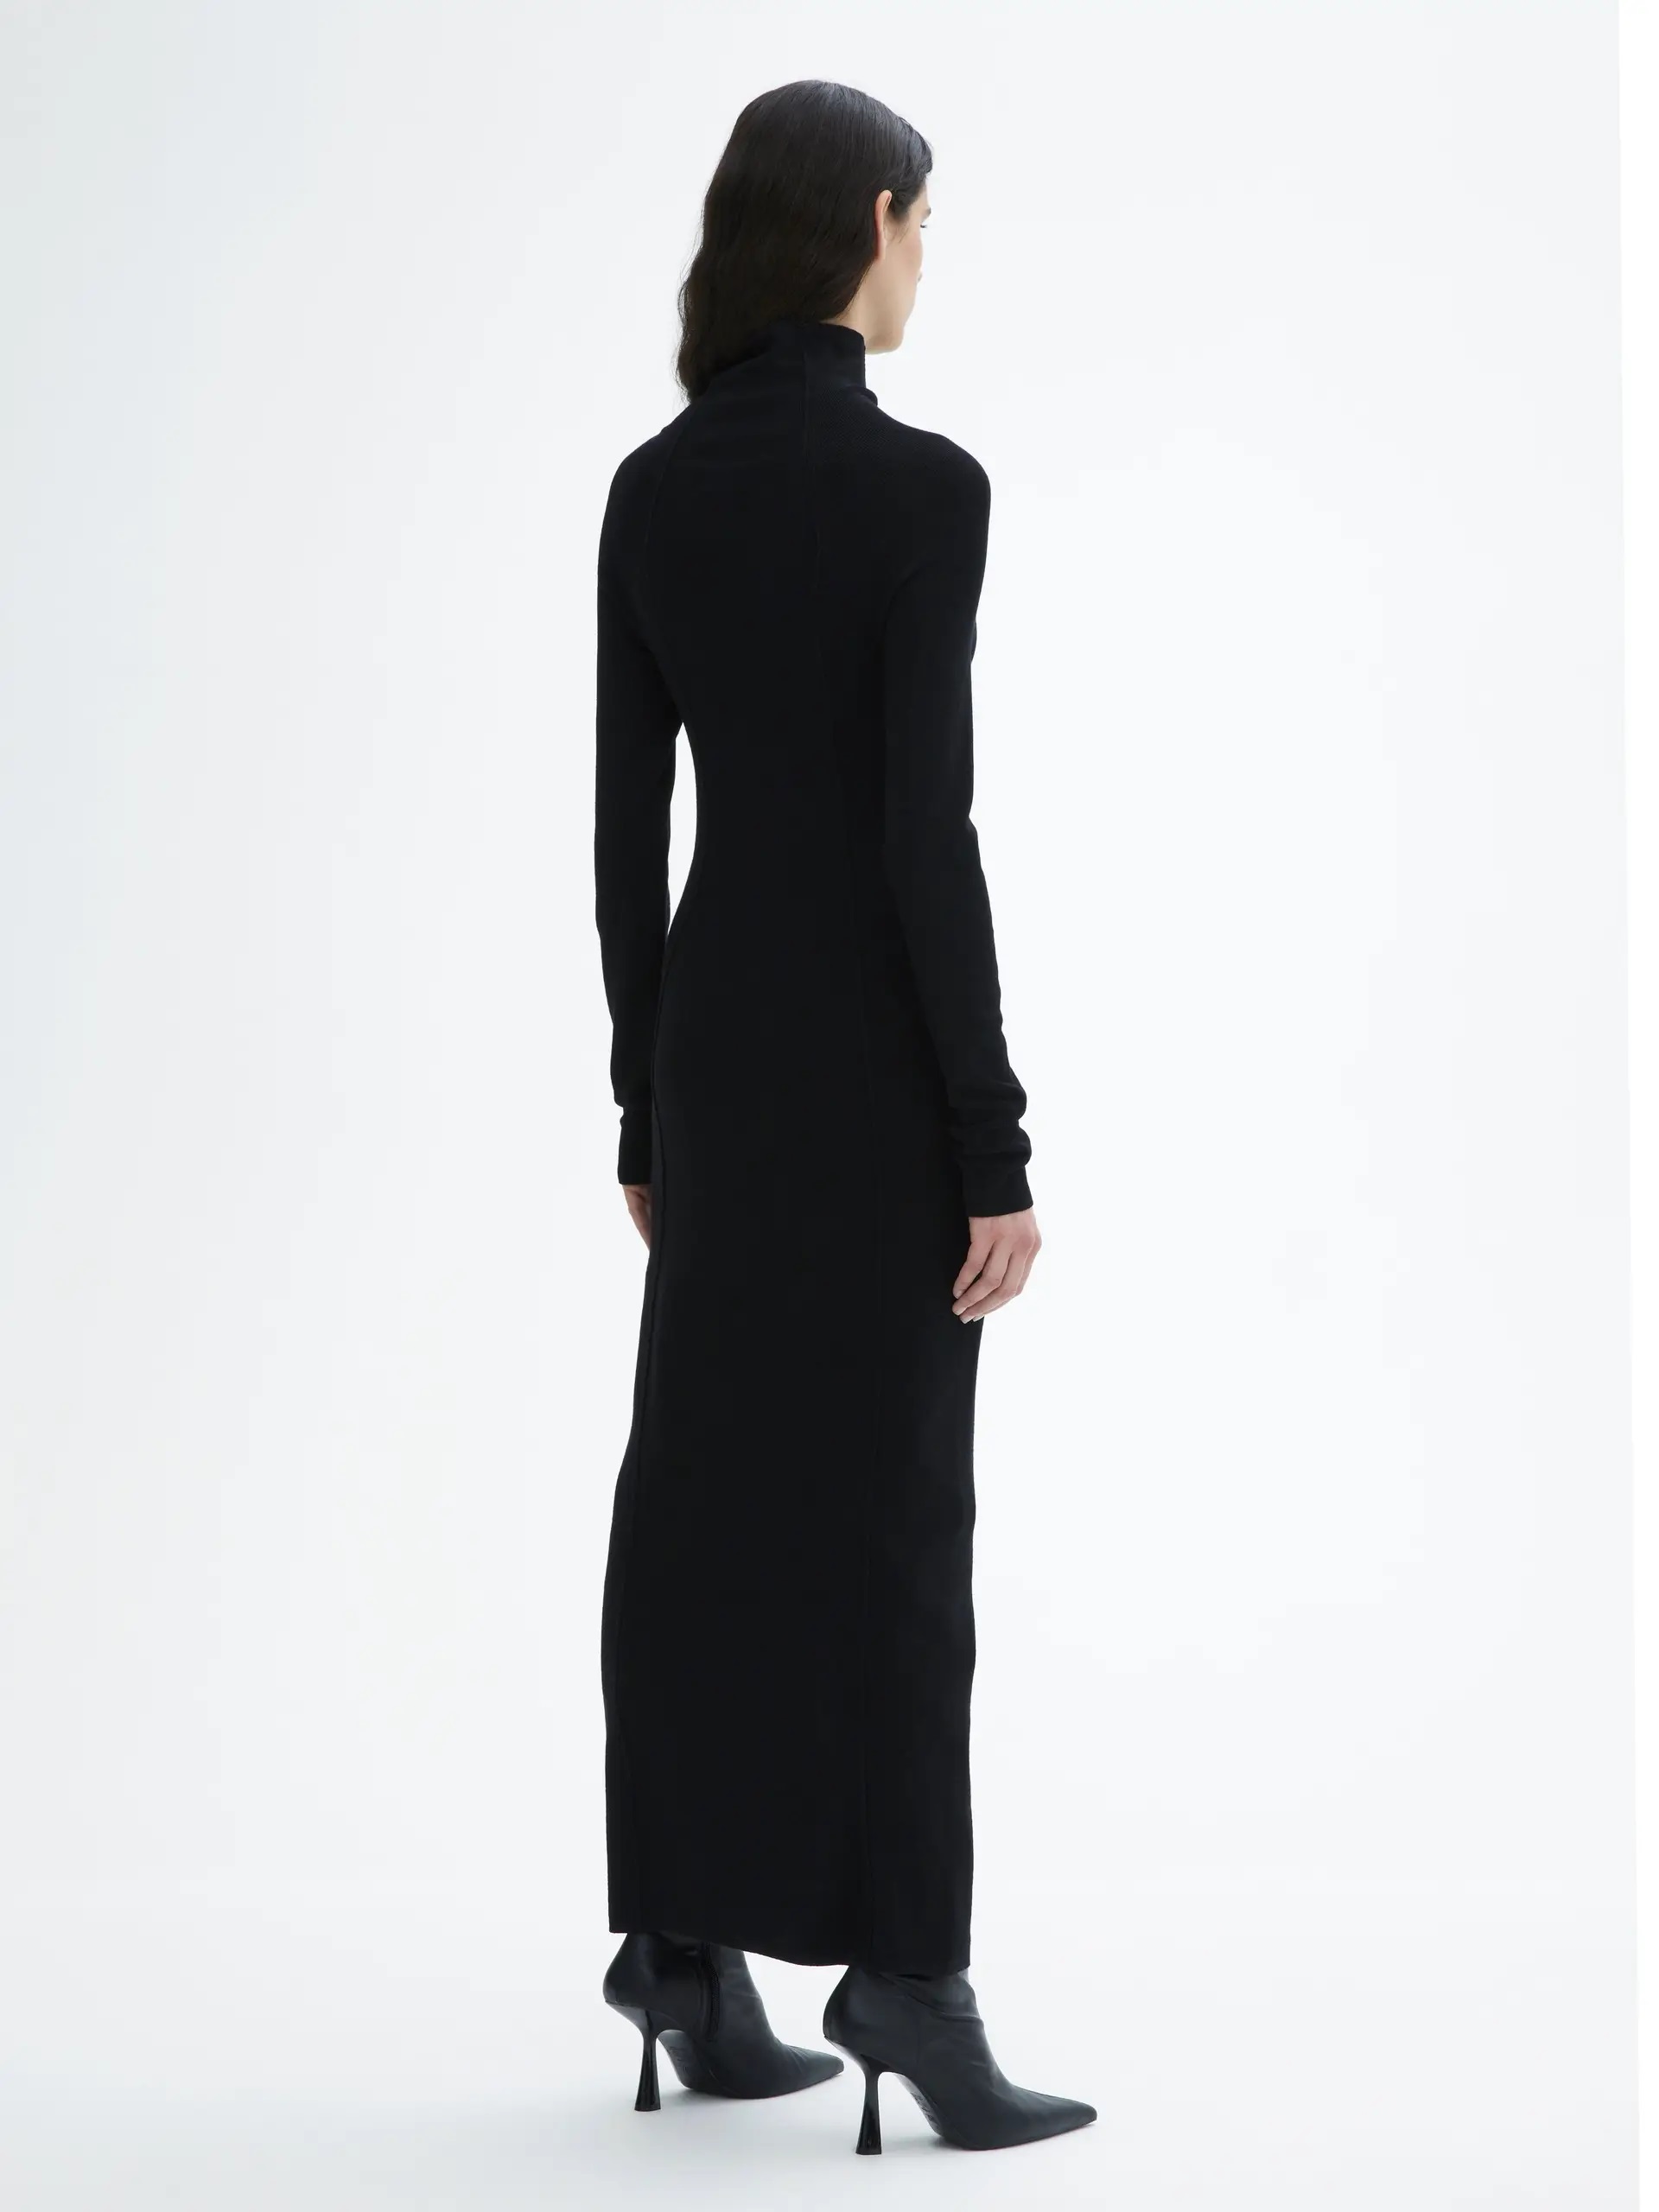 DAGMAR Merino Turtleneck Dress in Black